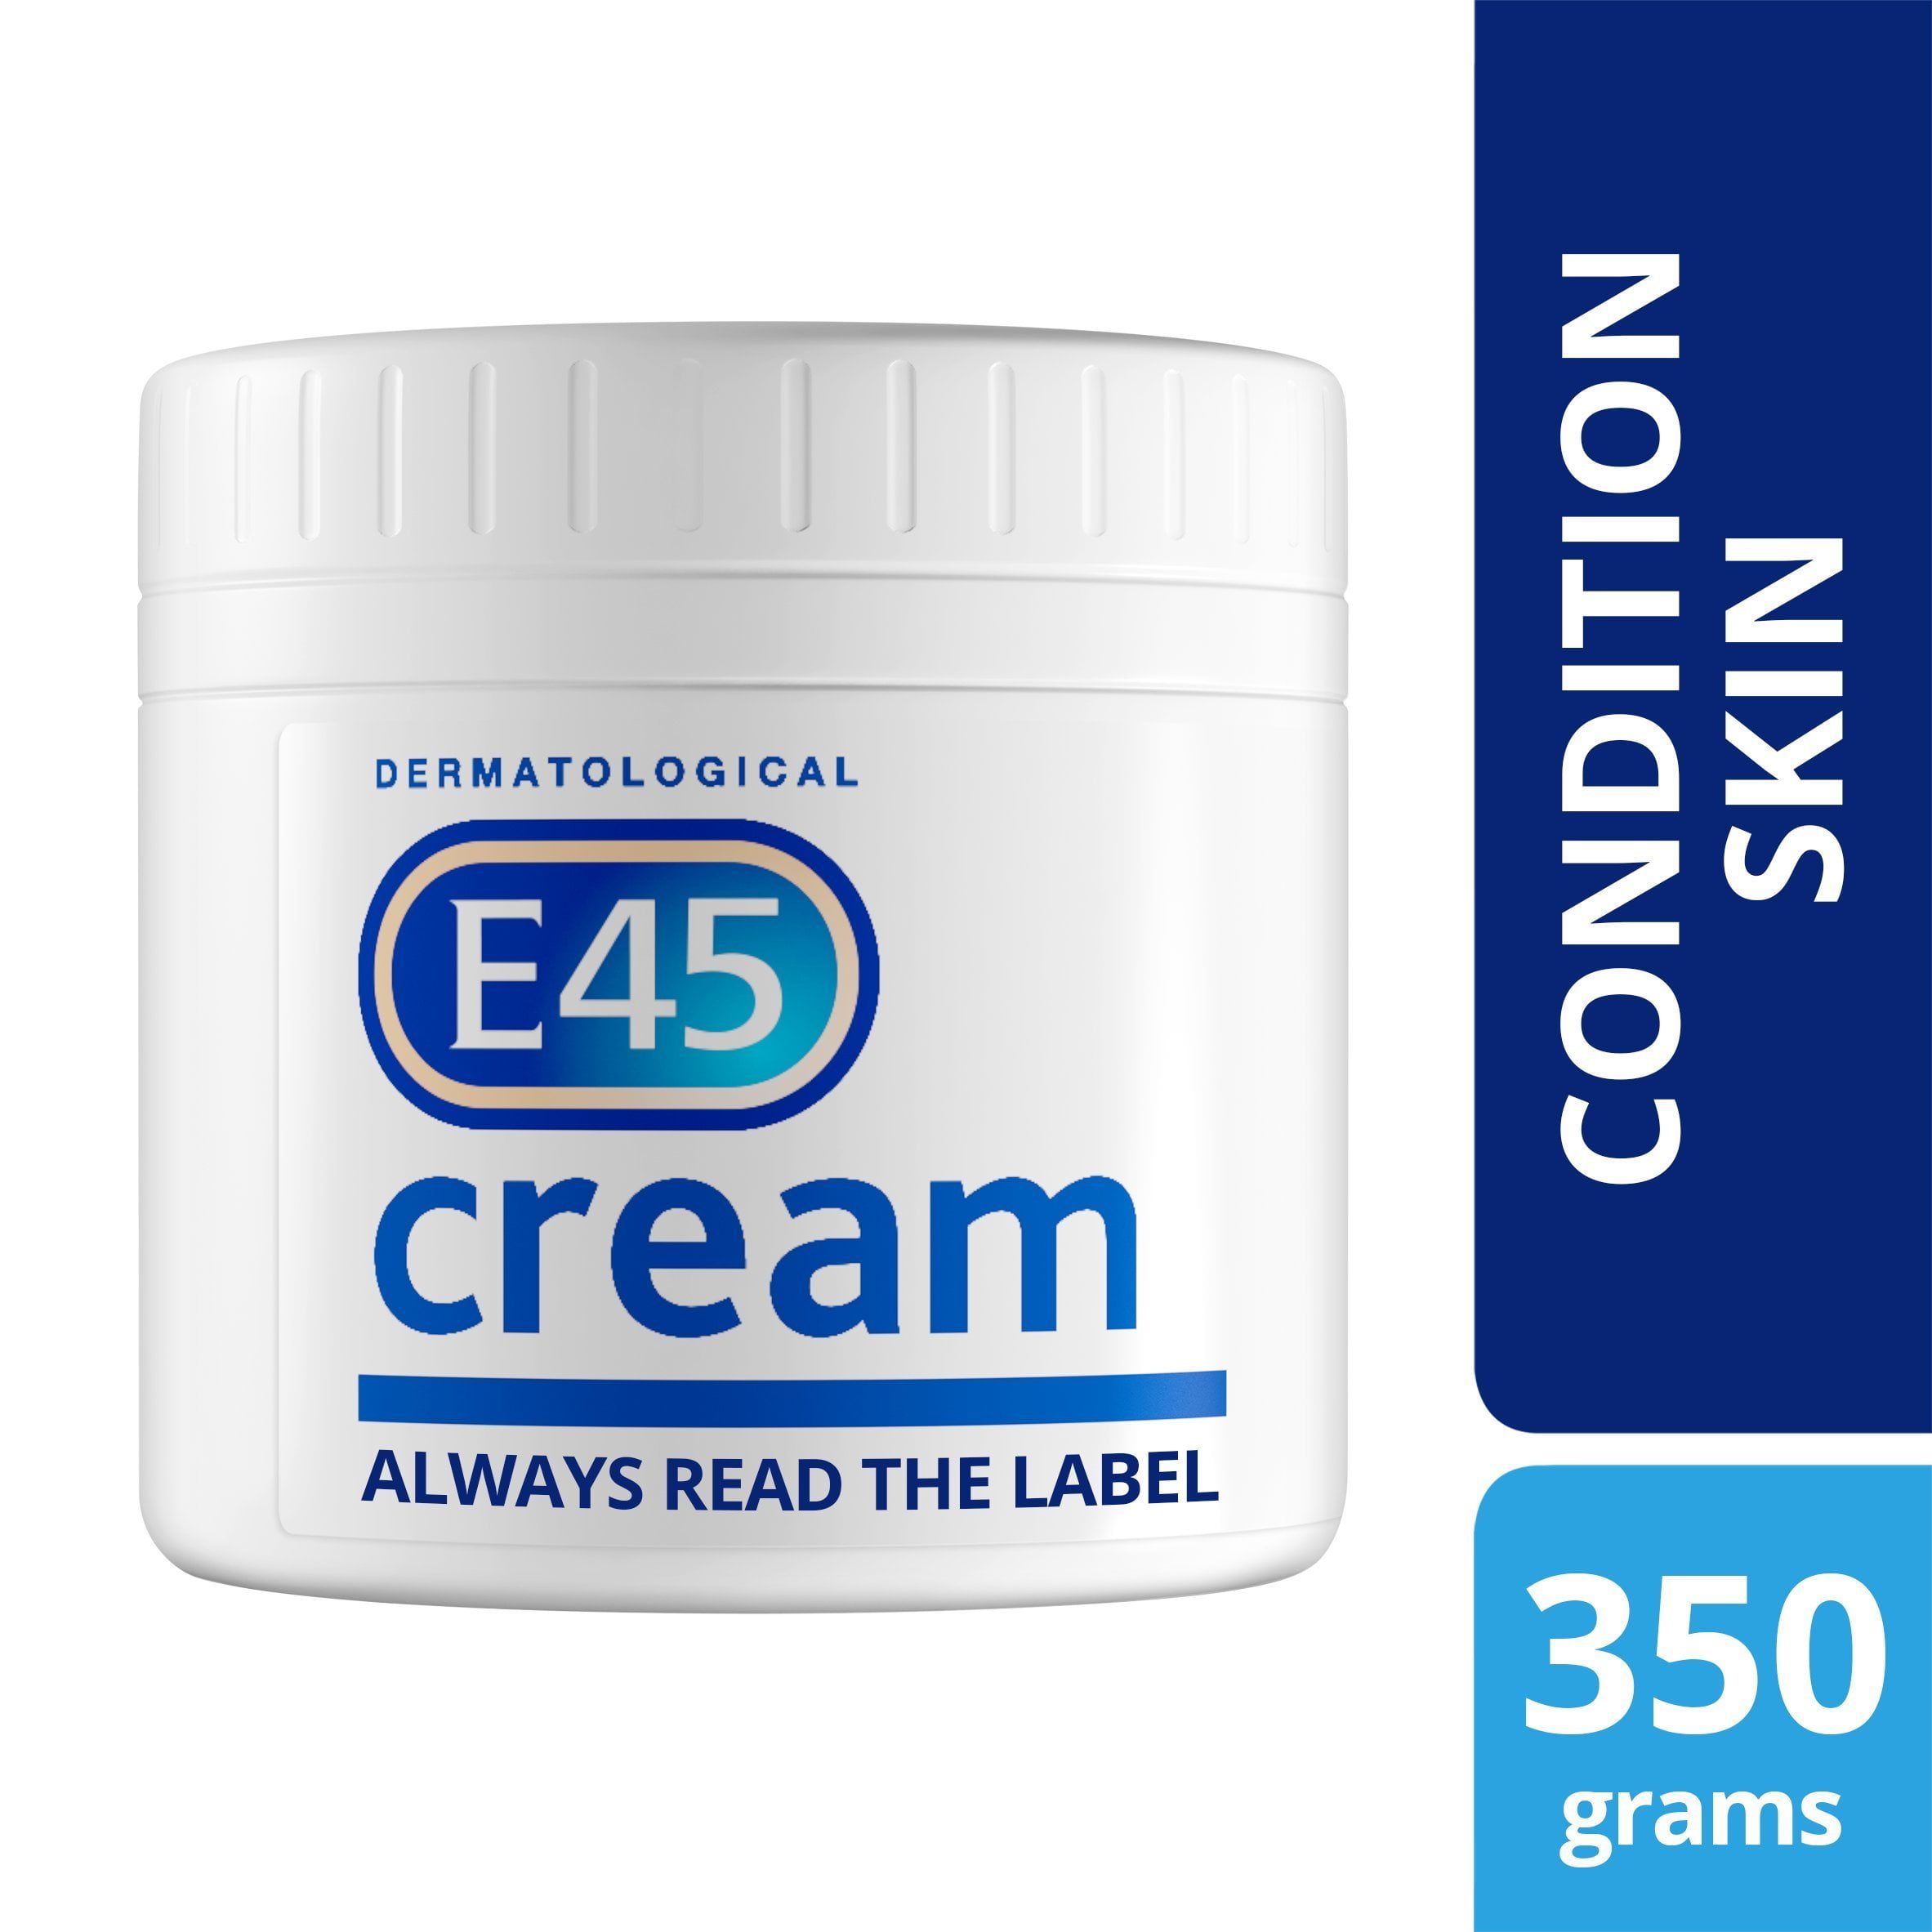 Купить крем 45. E 45 Cream. E45. Dermatological.